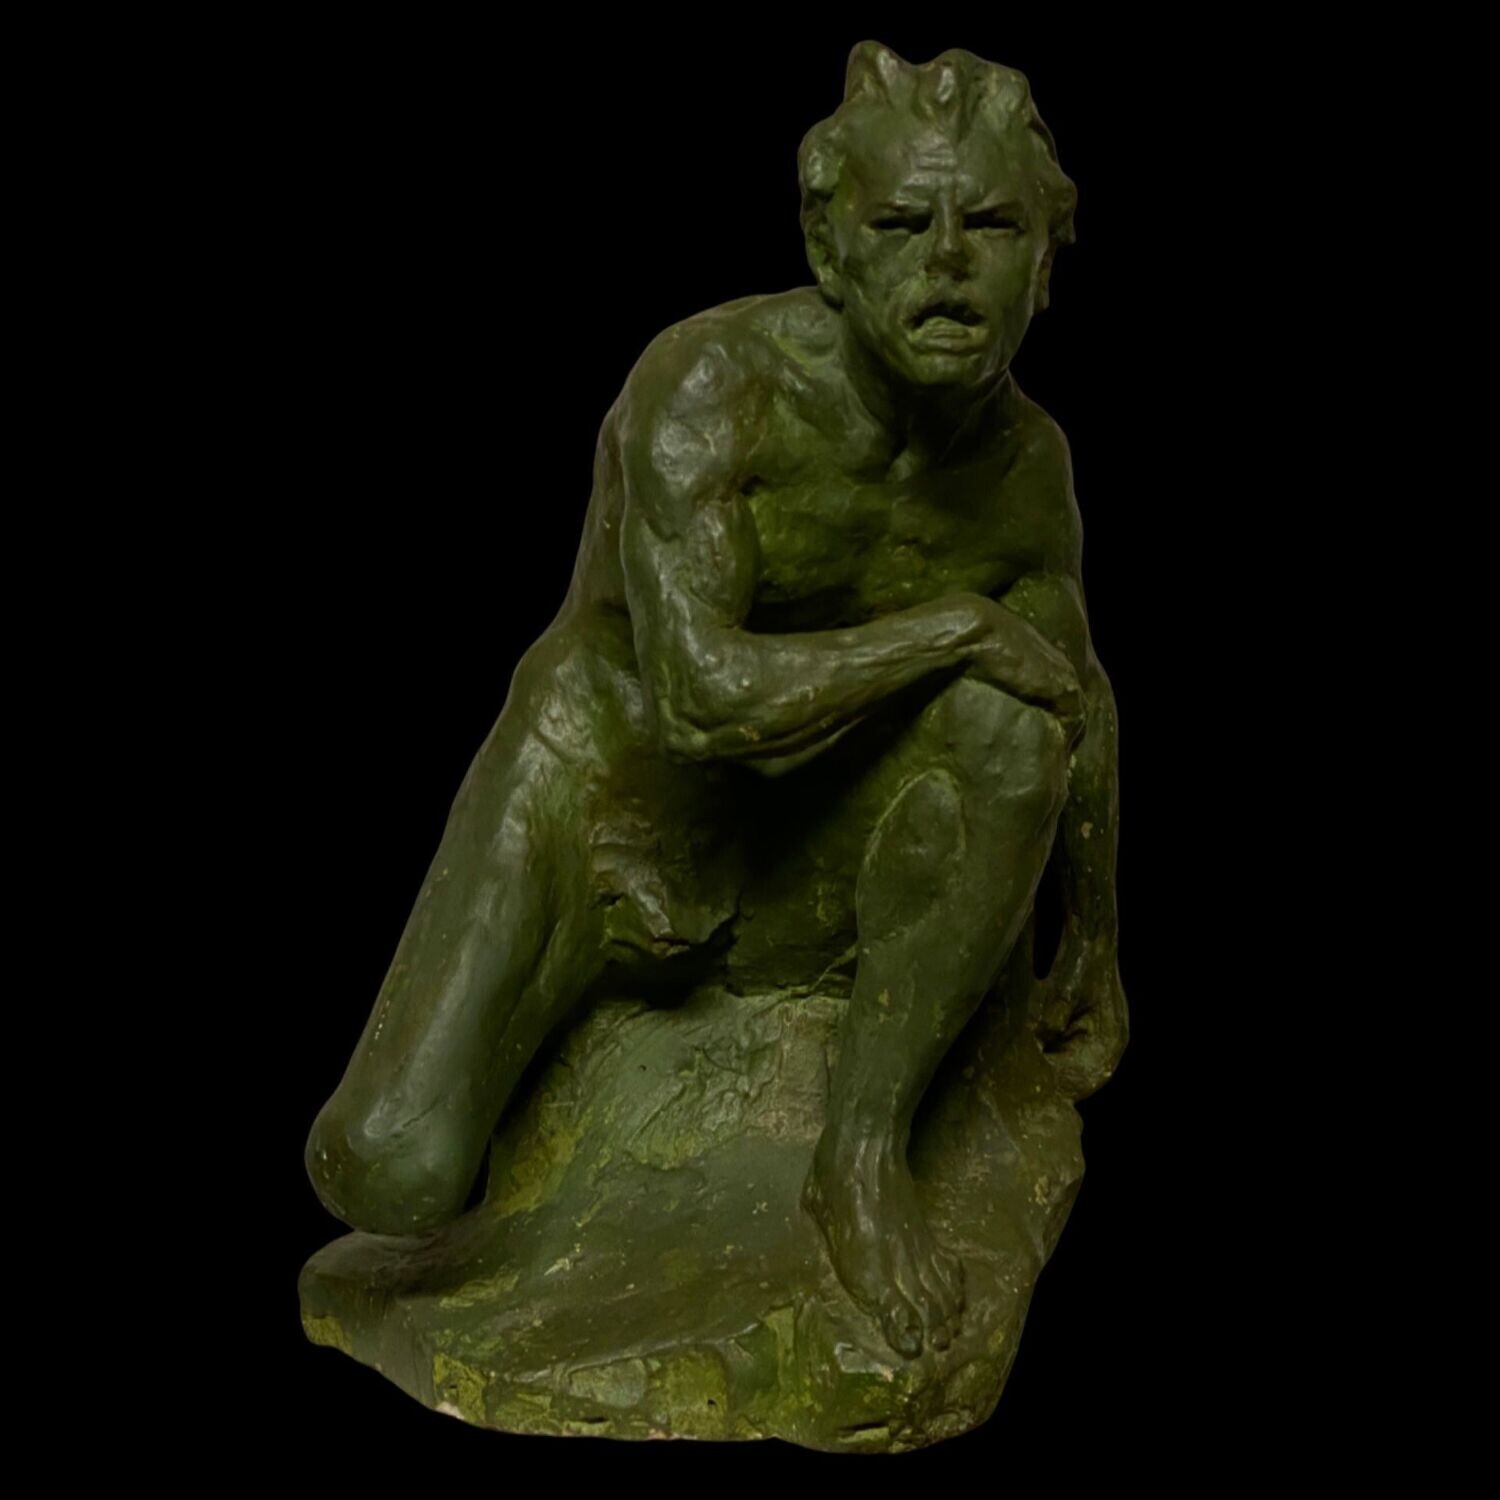 Terracotta demon sculpture, 19th century France
​